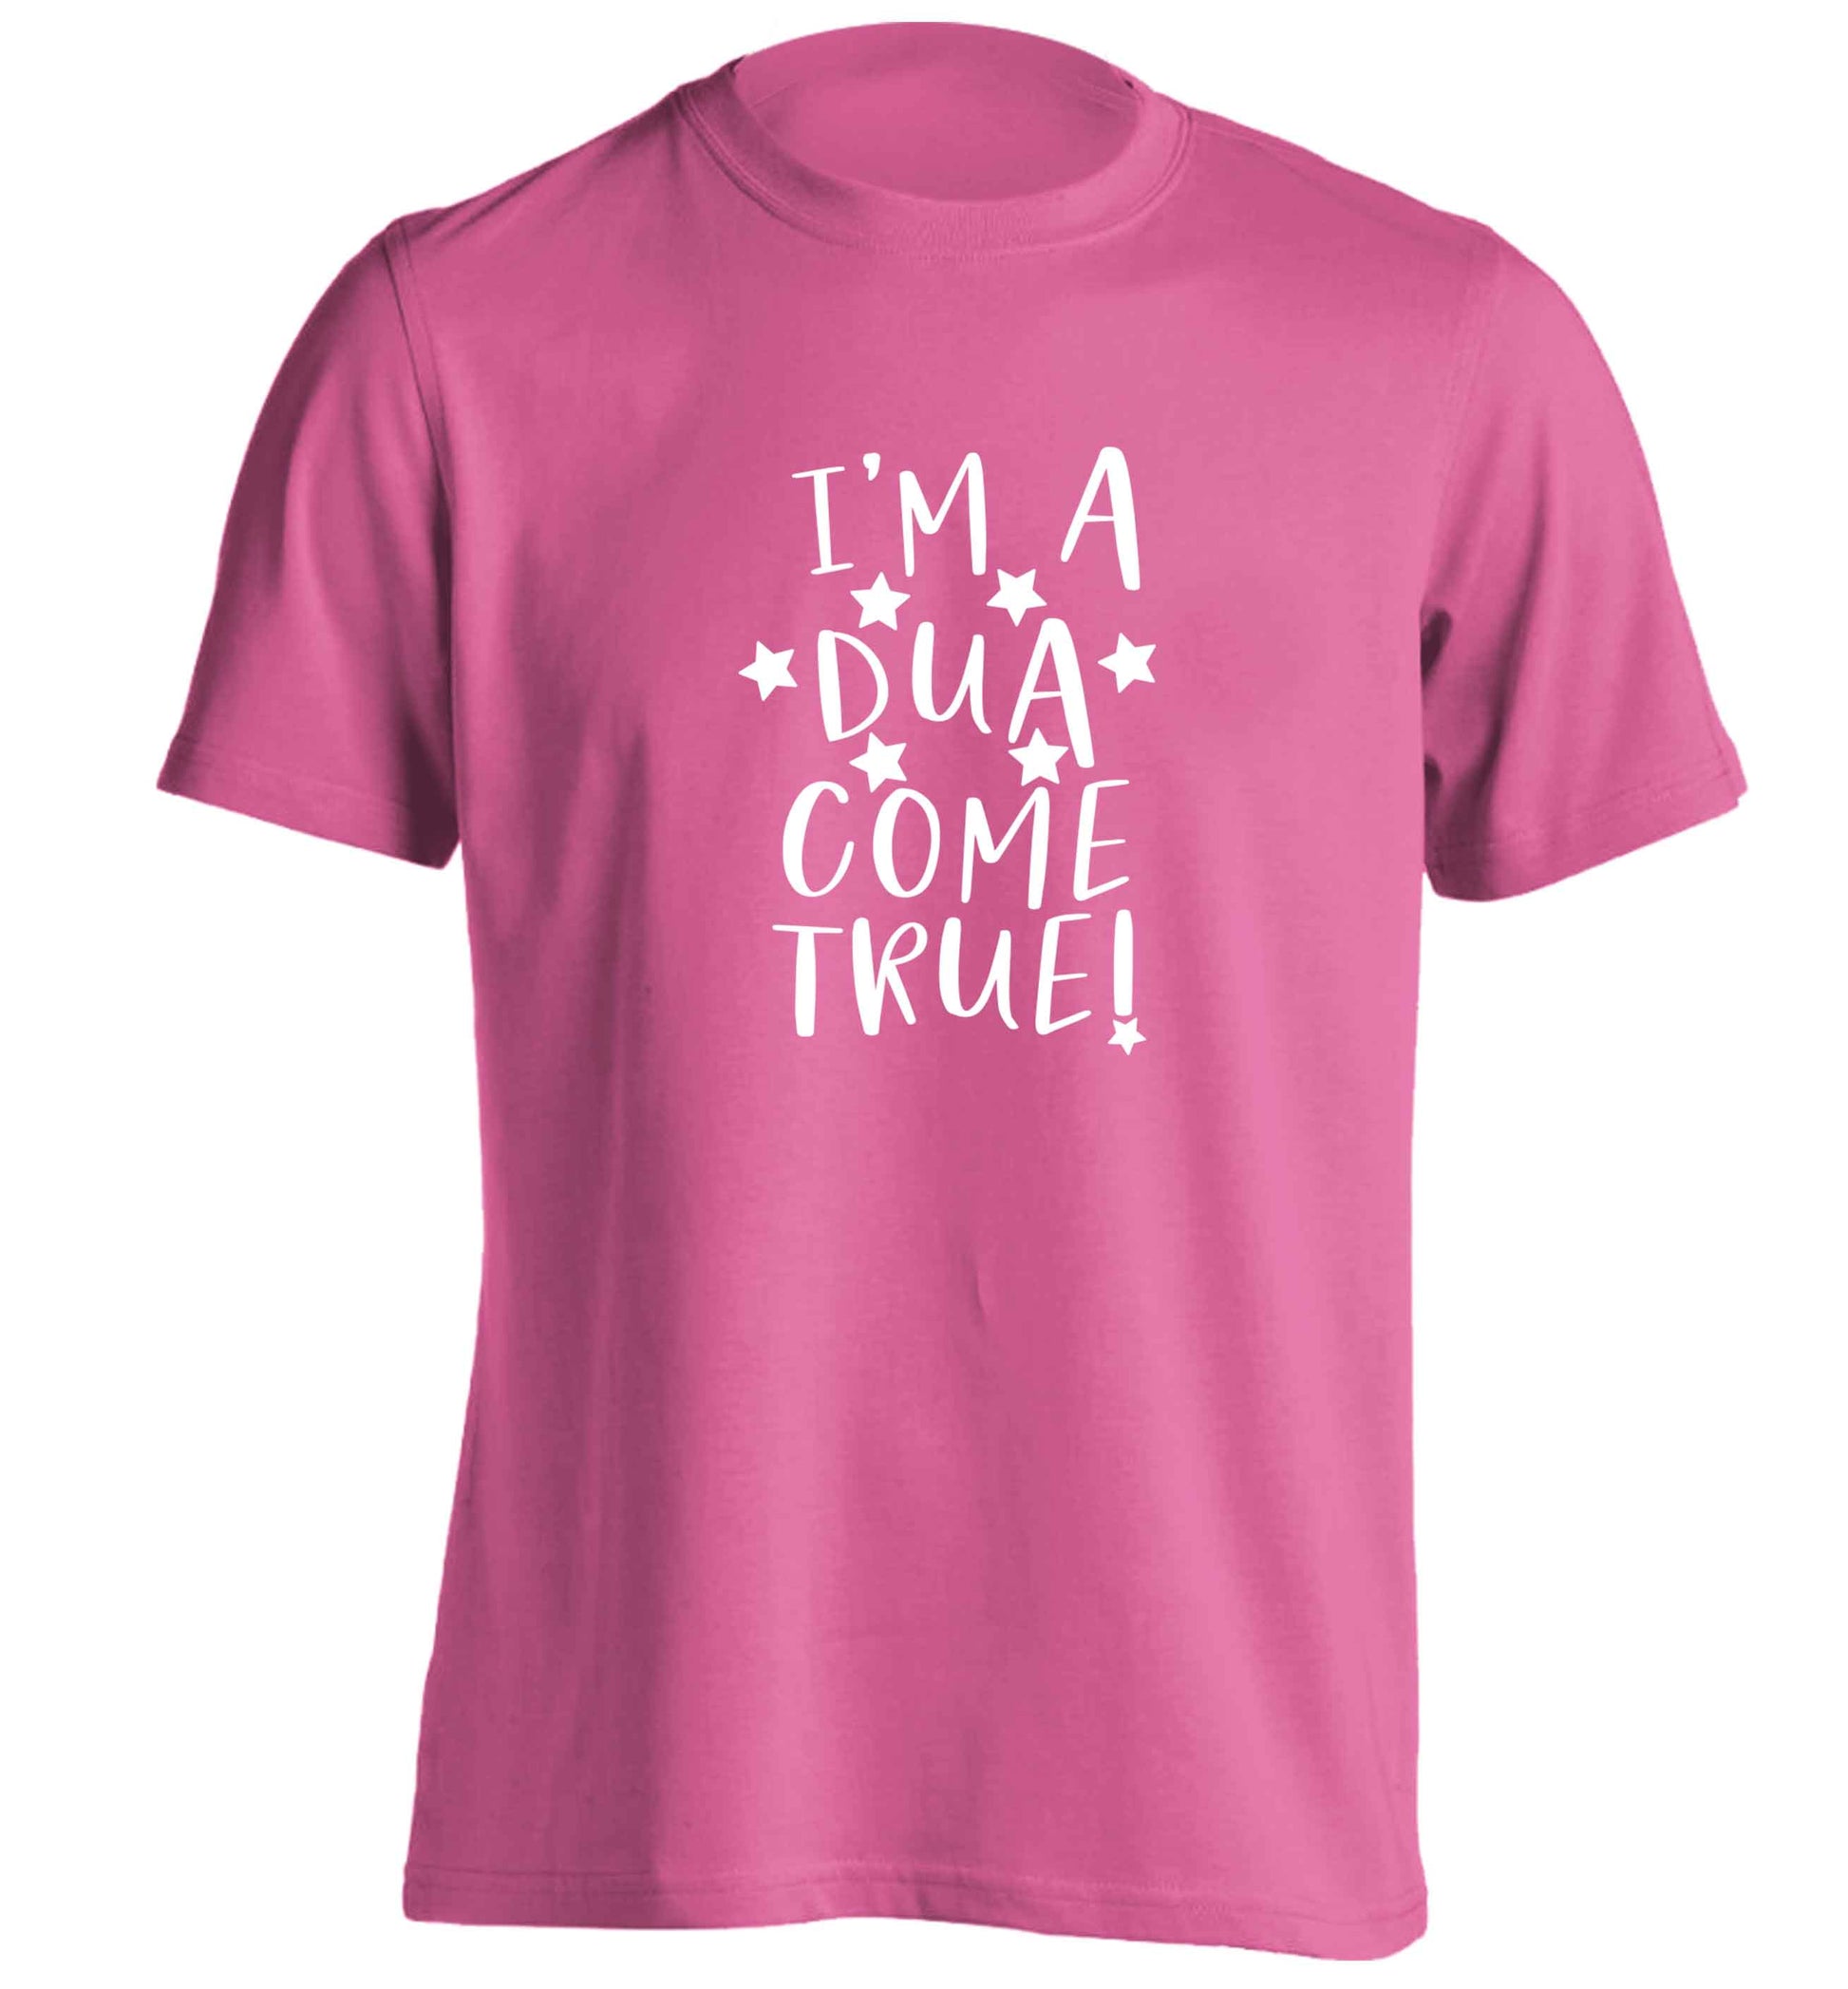 I'm a dua come true adults unisex pink Tshirt 2XL